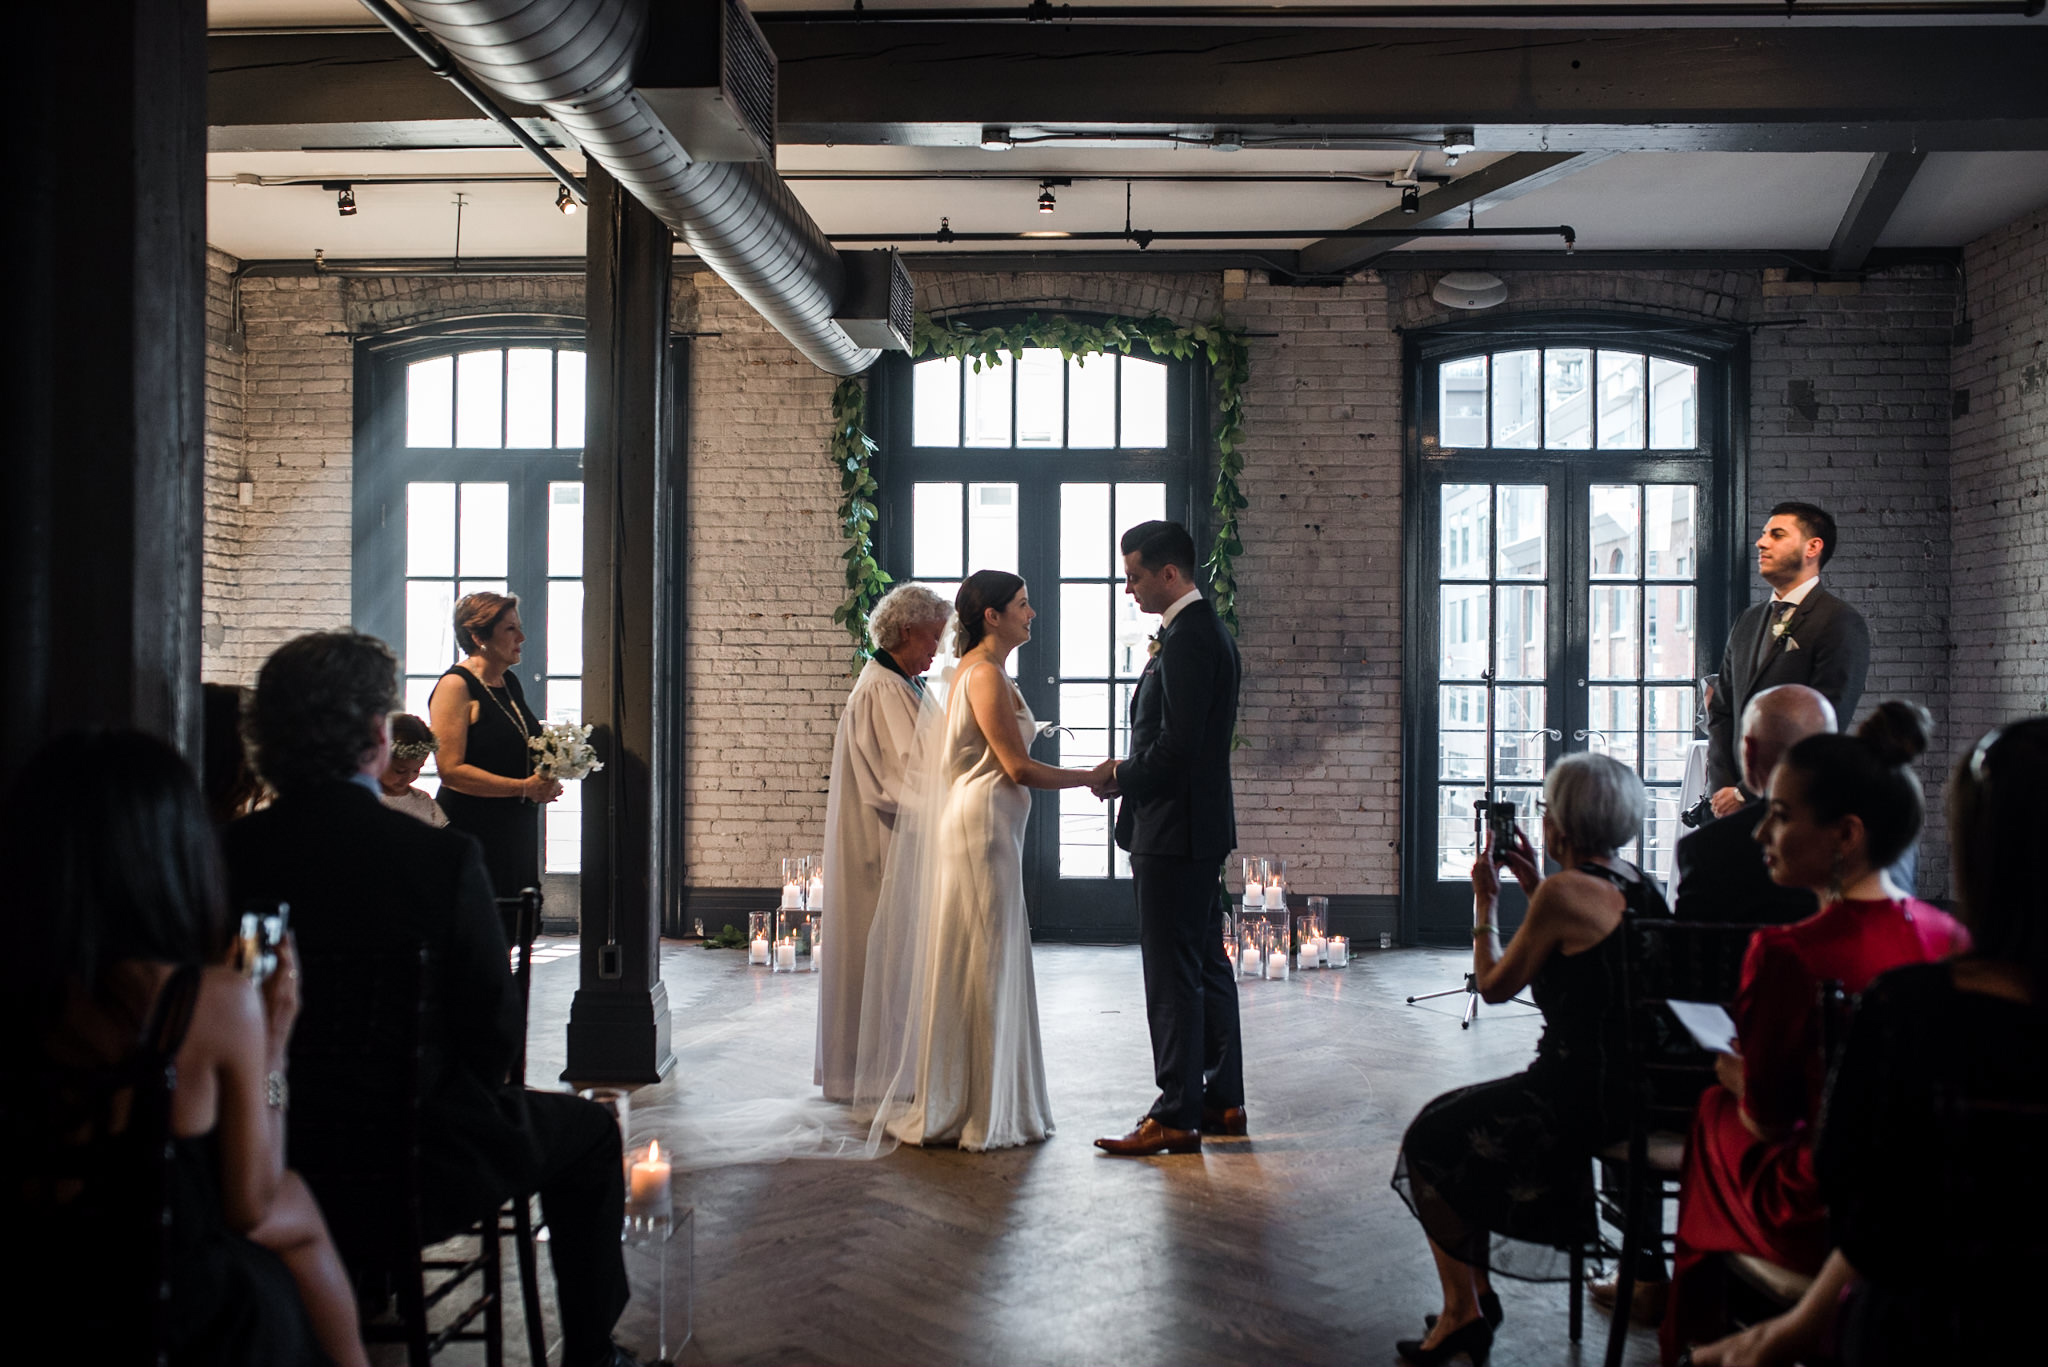 100-wedding-ceremony-storys-building-toronto-photographer-documentary.jpg